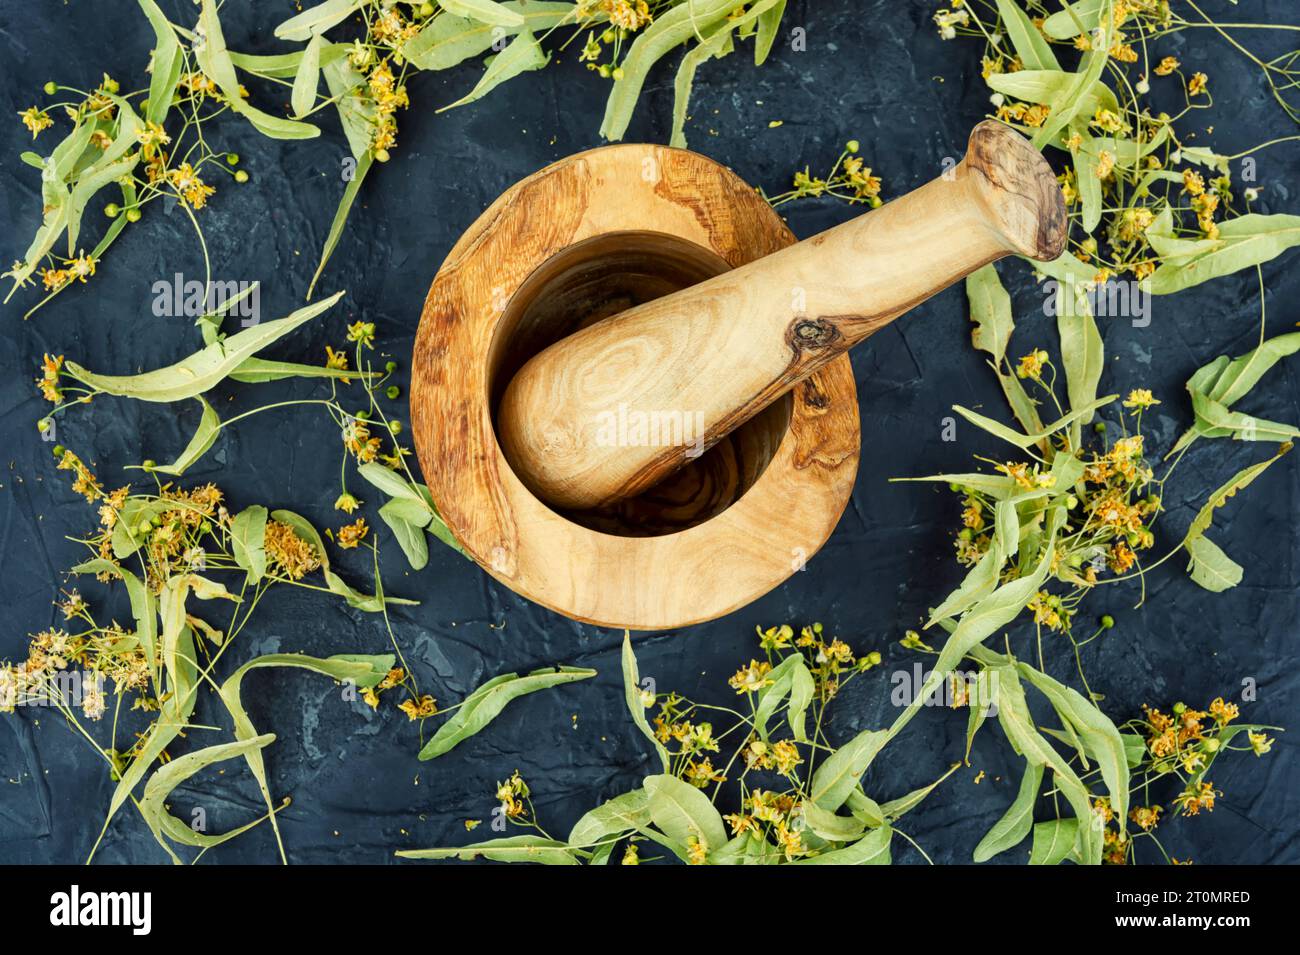 Healing inflorescences of linden or tilia, herbal medicine, medicinal plants. Stock Photo